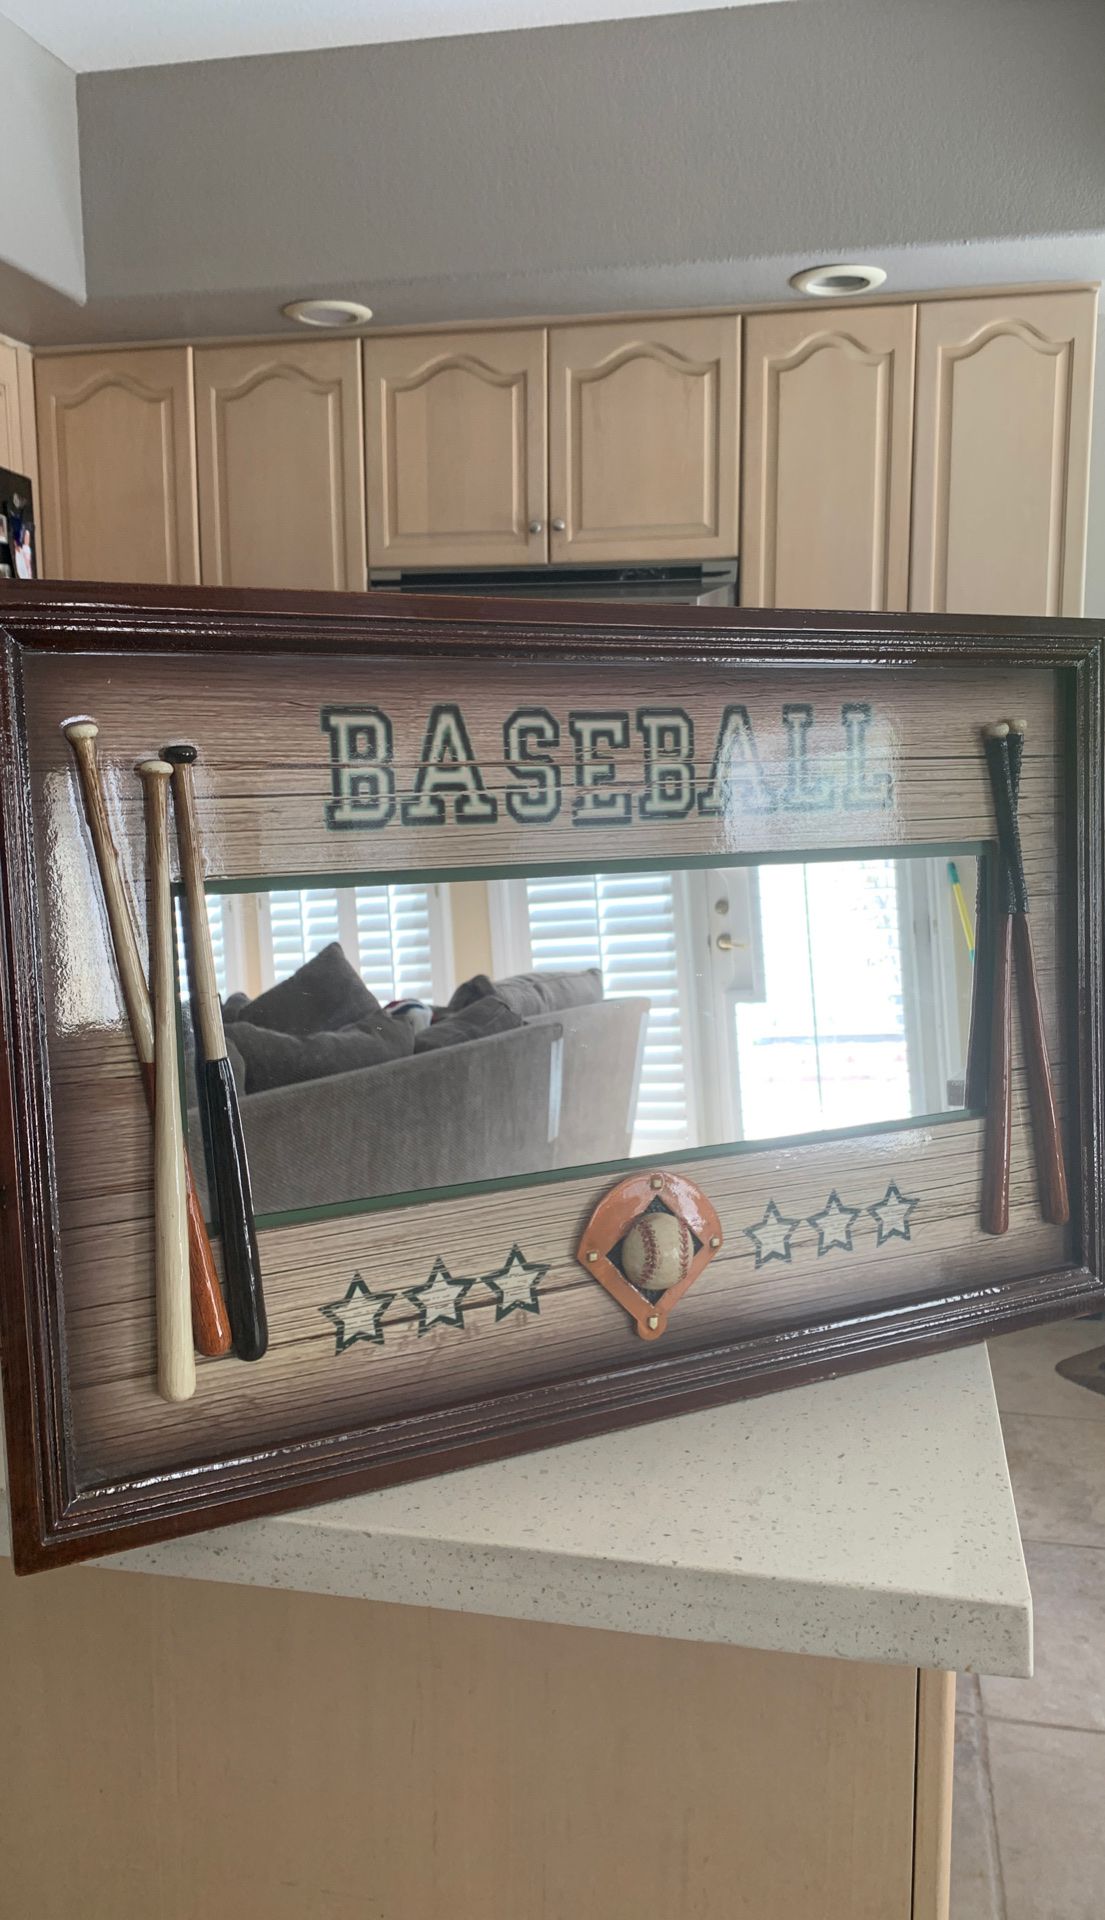 Baseball Wall Decor/Mirror